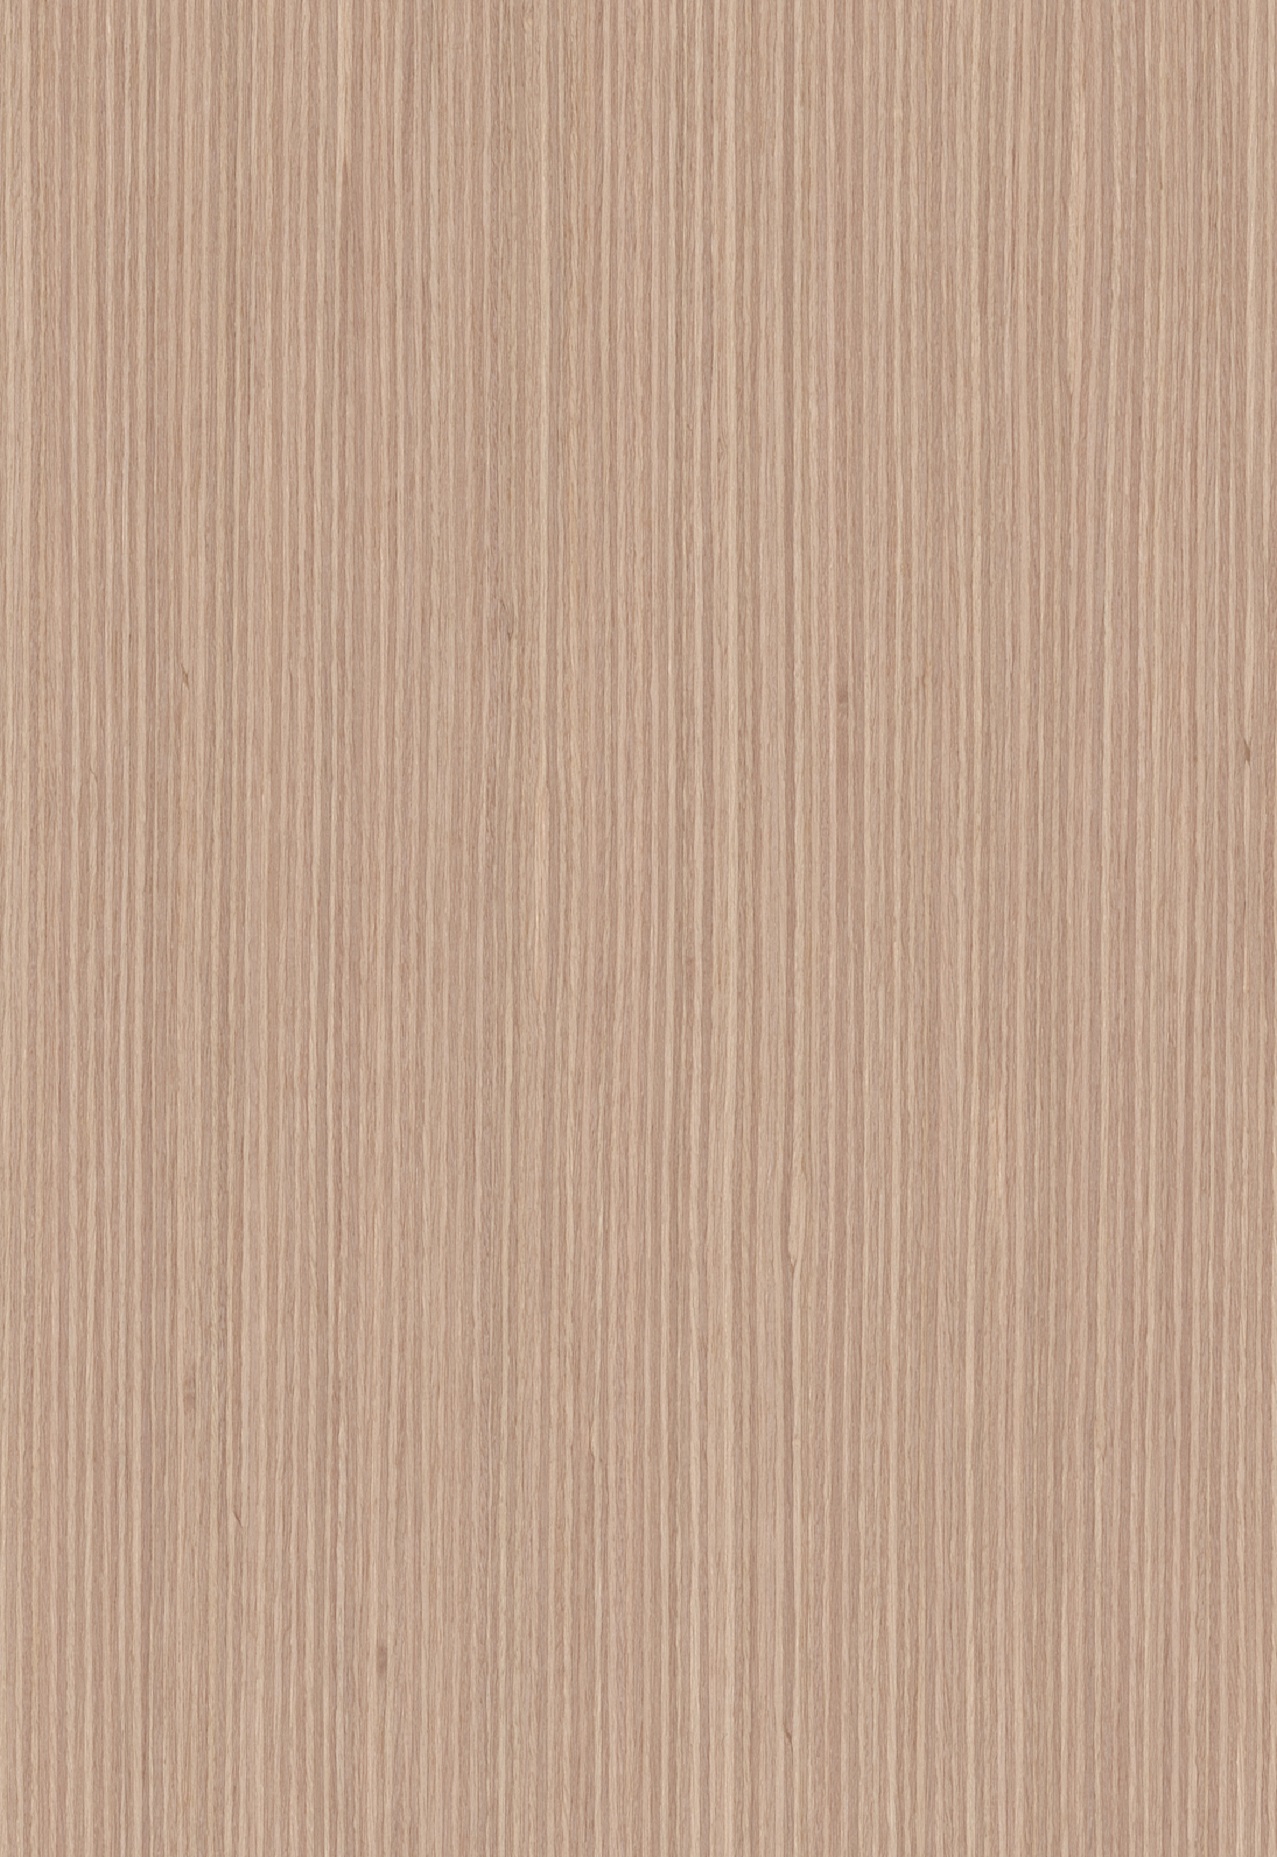 k6349-柚木直纹-高品质超平夹板基材 科技木皮 uv涂料环保涂装